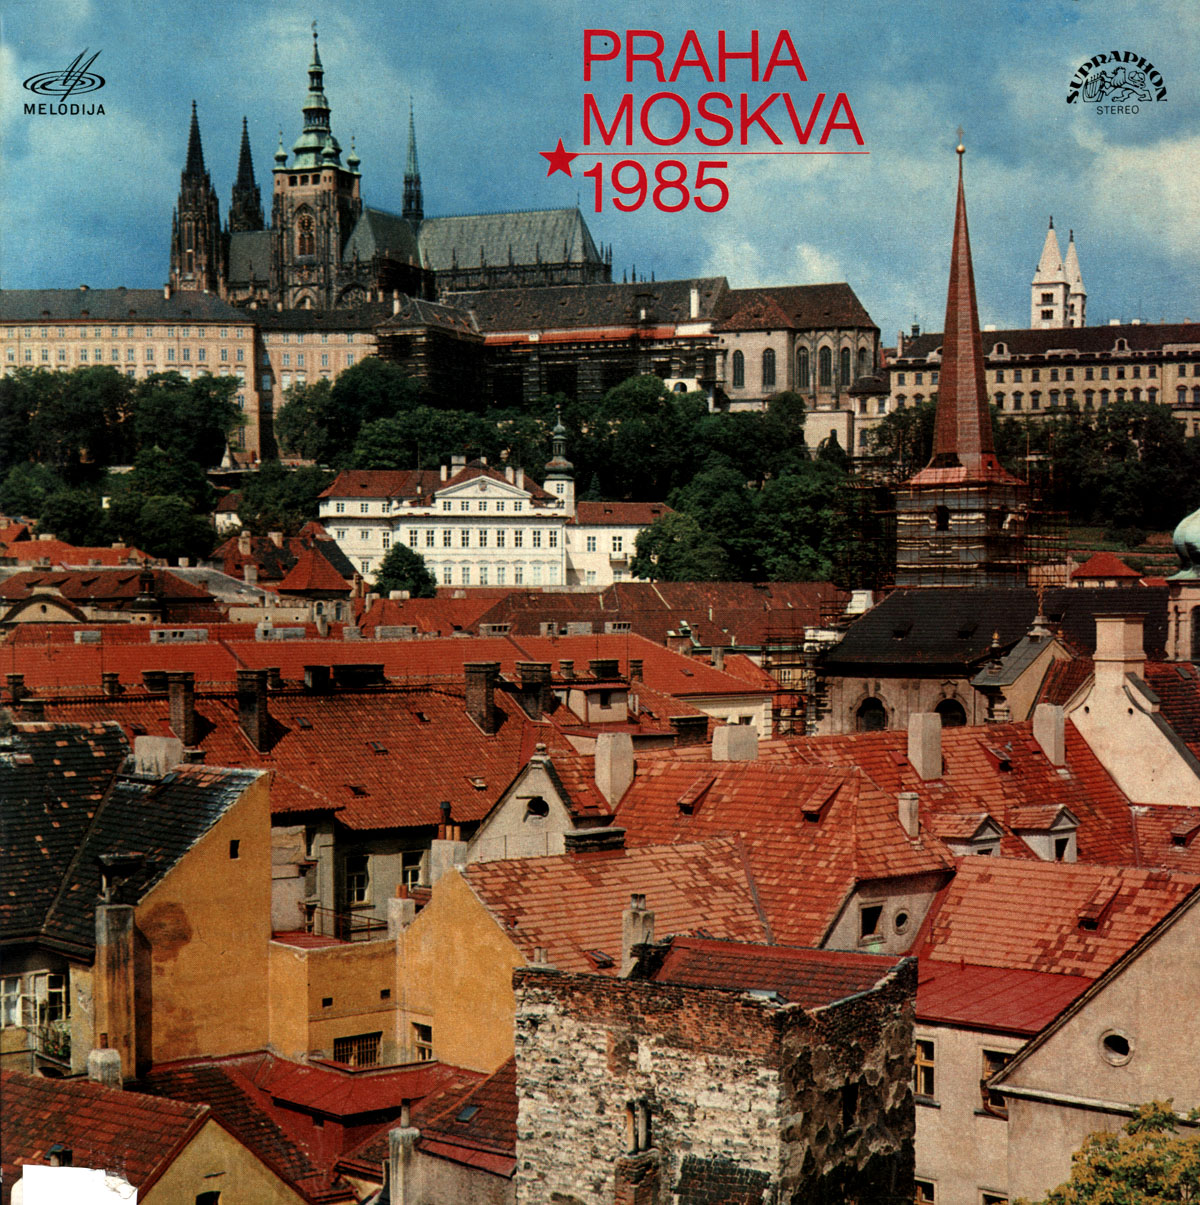 PRAHA - MOSKVA 1985